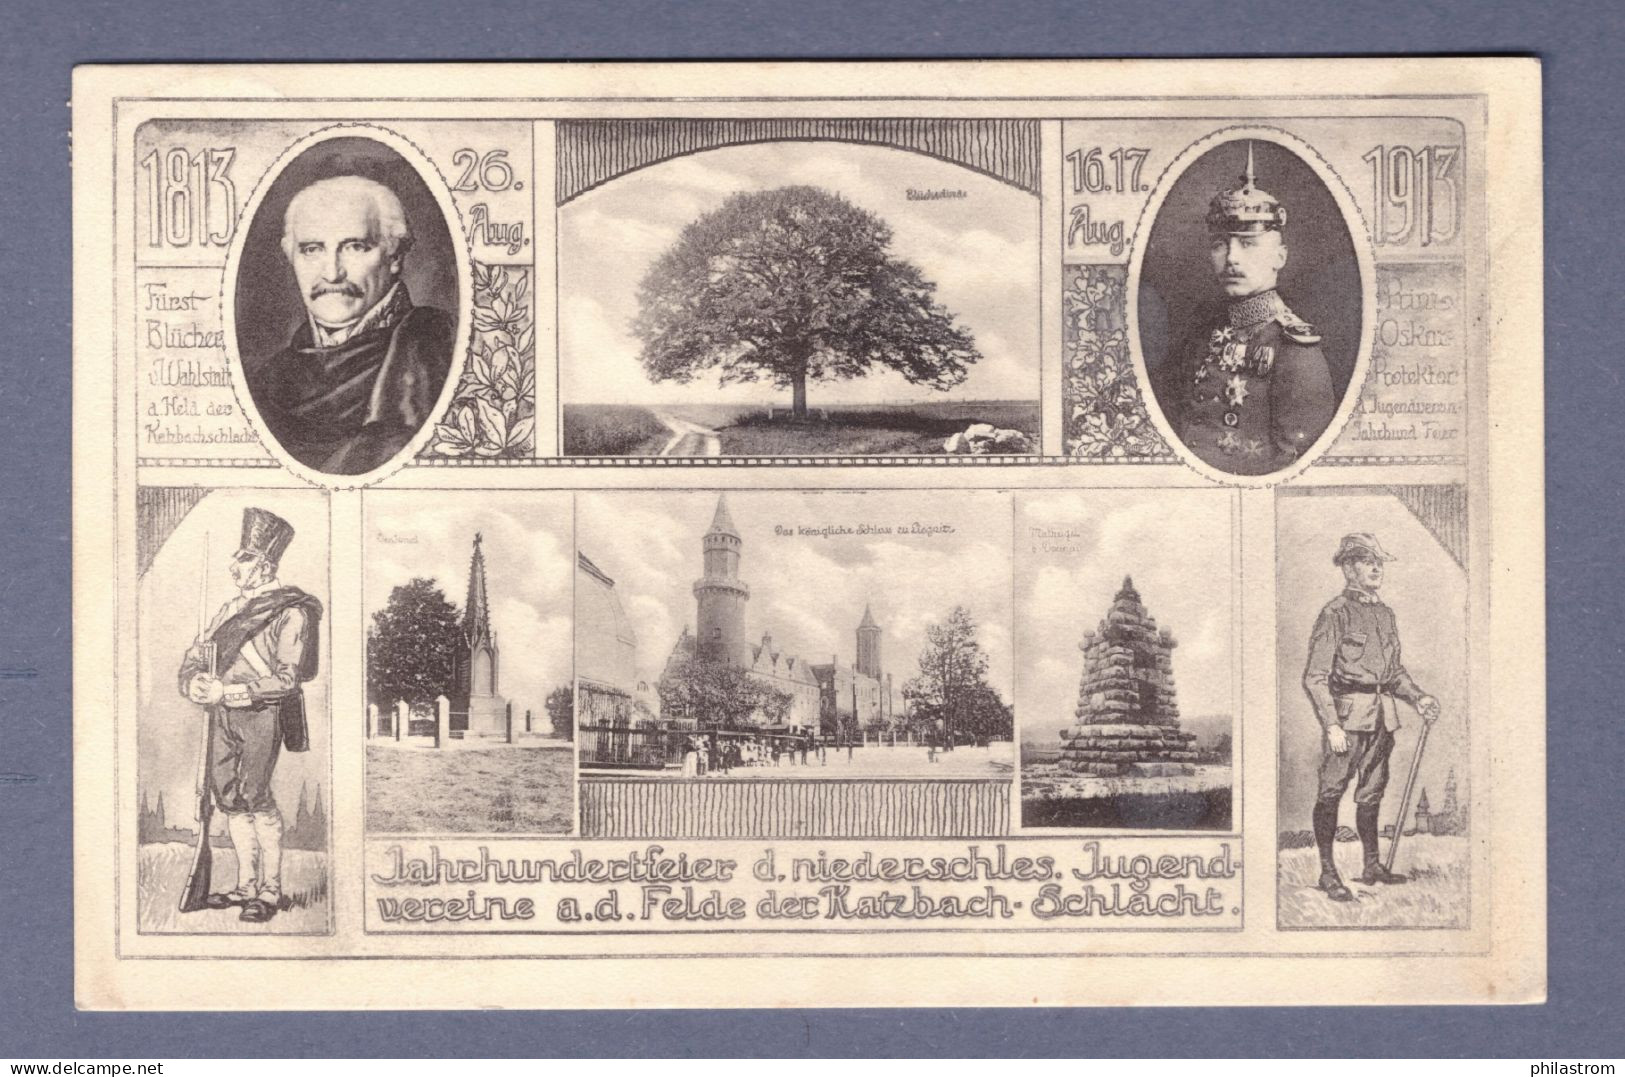 DR Bild Postkarte - Offizielle Postkarte ...Katzbachschlacht - Neuguth Heinzenburg 28.8.13  (CG13110-273) - Lettres & Documents